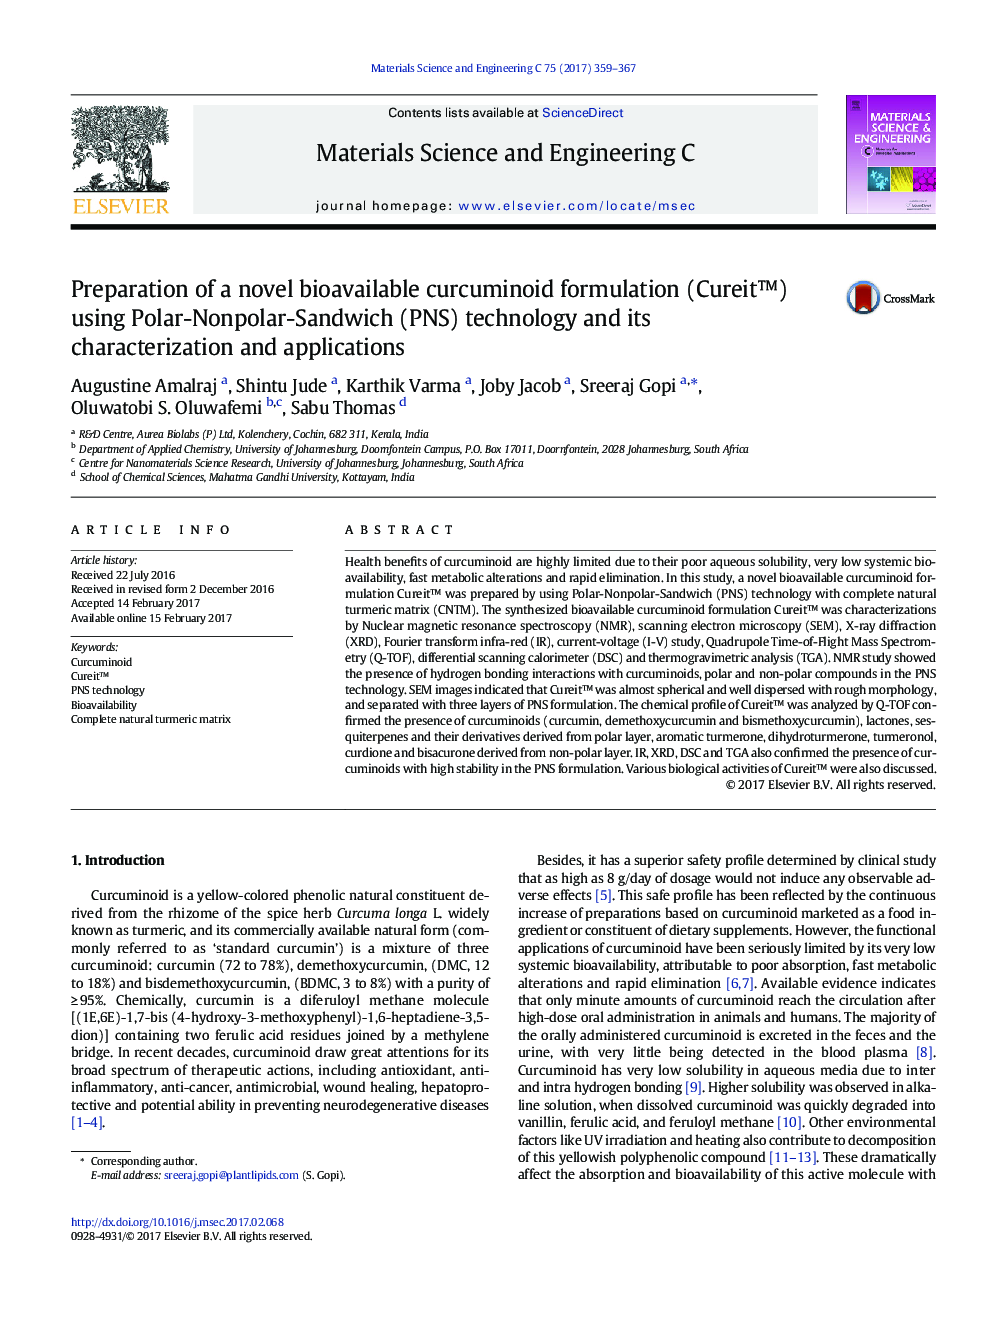 Preparation of a novel bioavailable curcuminoid formulation (Cureitâ¢) using Polar-Nonpolar-Sandwich (PNS) technology and its characterization and applications